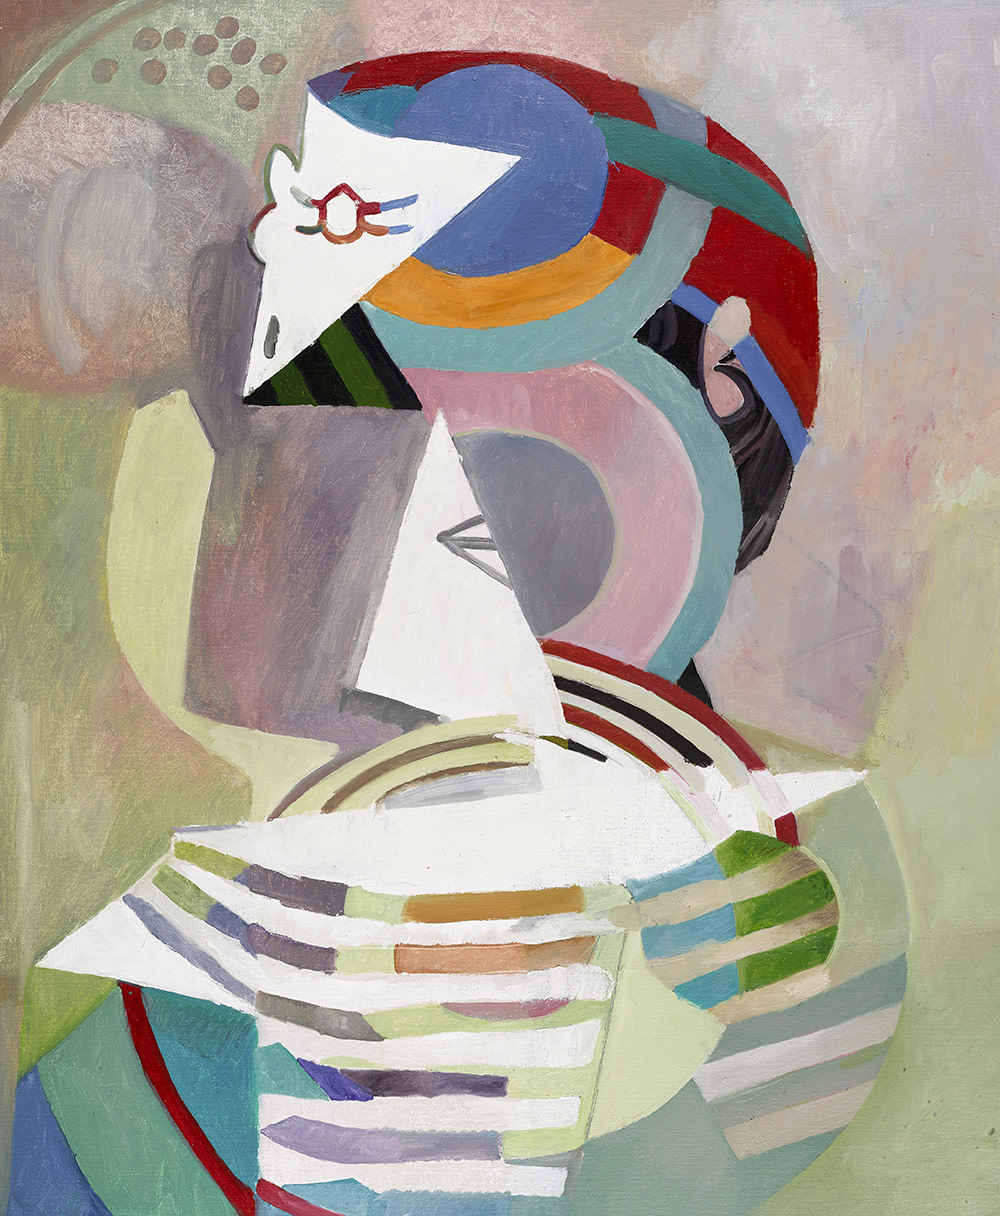 Wolfe von Lenkiewicz, Picasso in a Striped Shirt, 2017